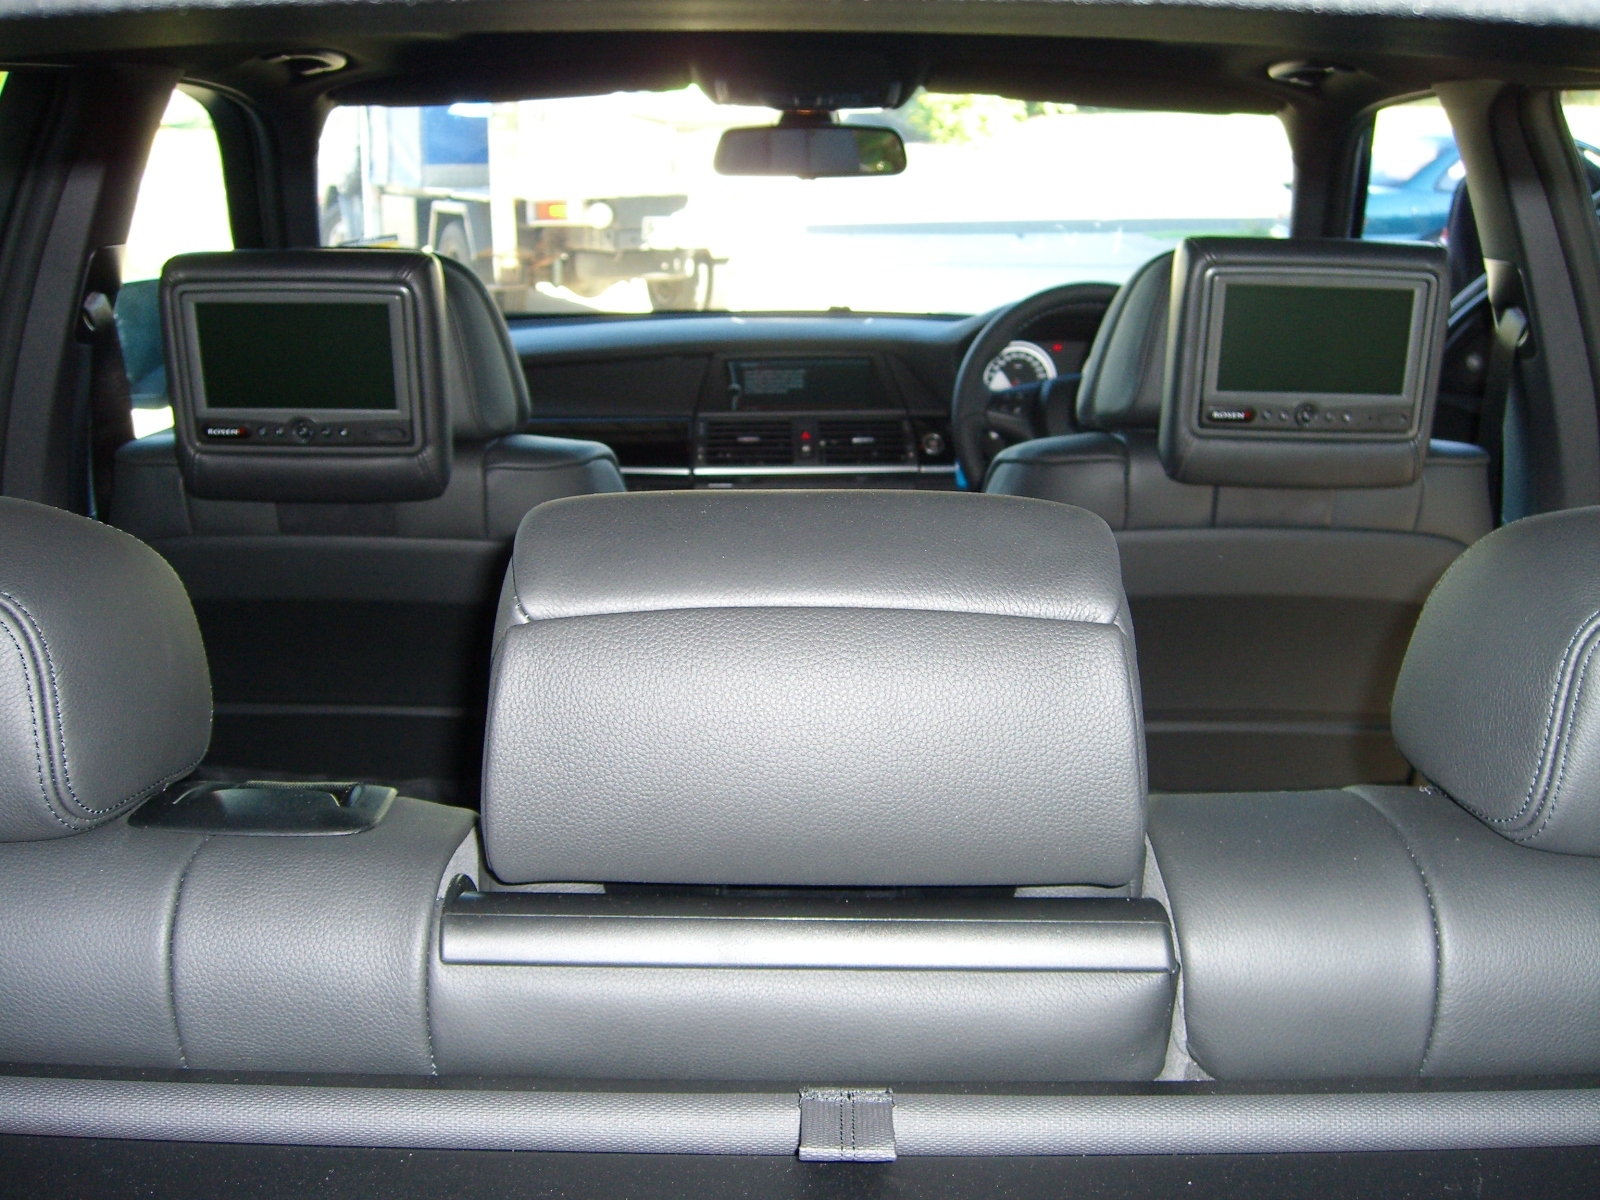 BMW X5M Rear seat DVD system